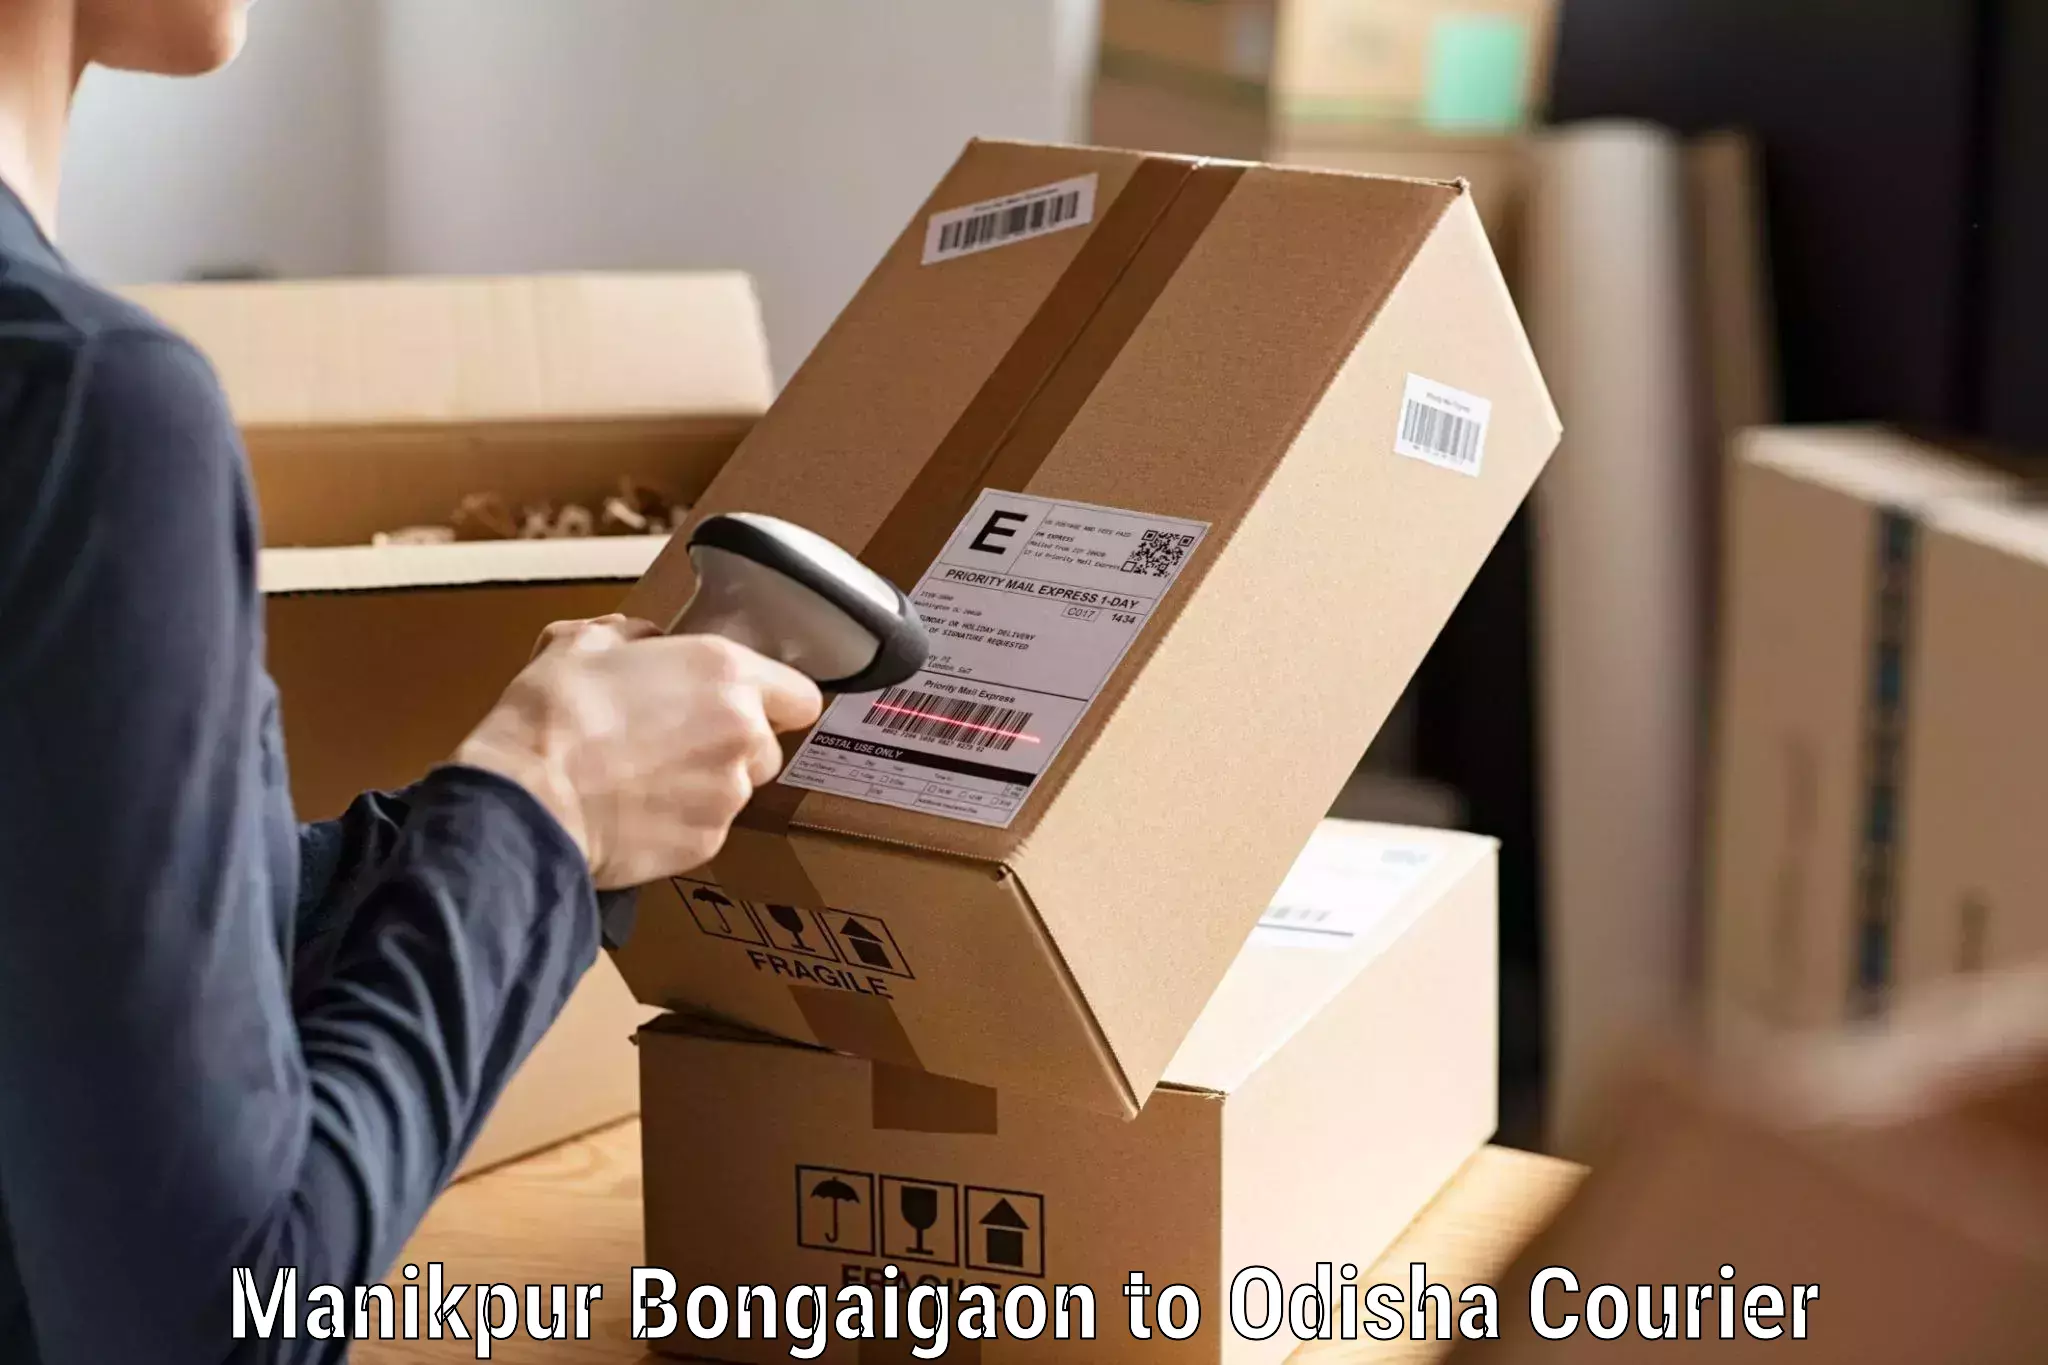 Smart parcel solutions Manikpur Bongaigaon to Gopalapur Ganjam